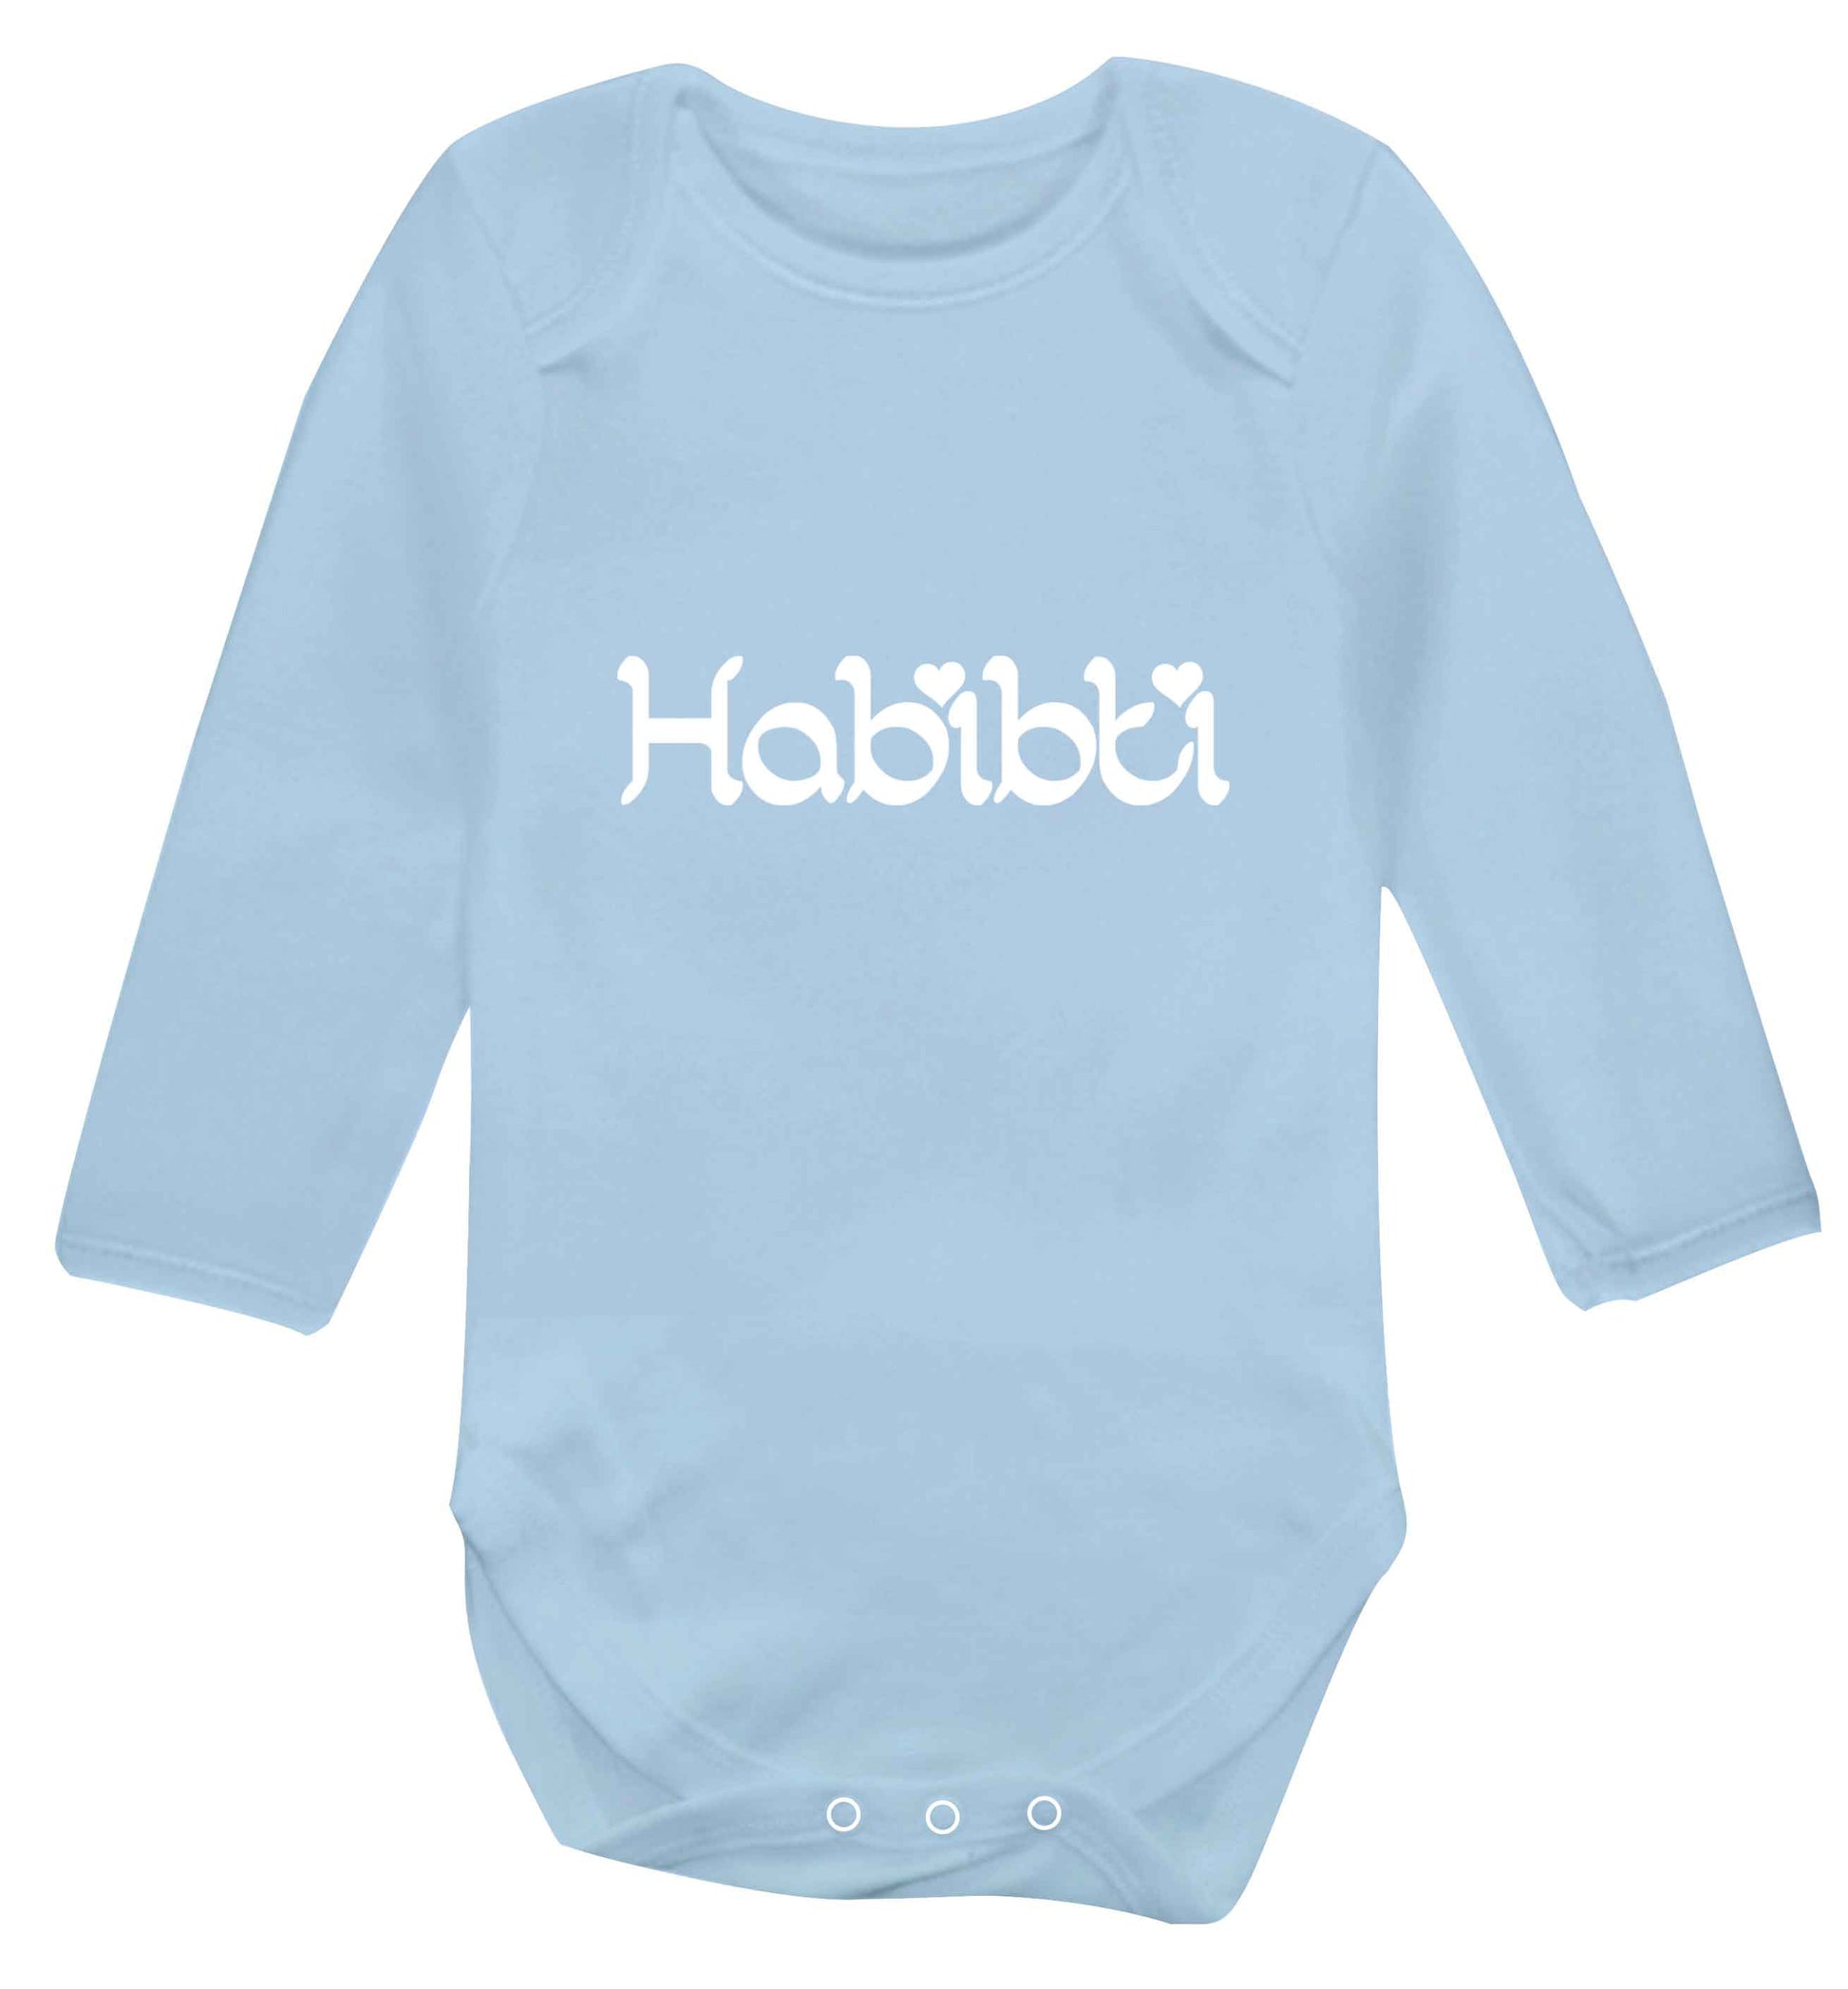 Habibiti baby vest long sleeved pale blue 6-12 months